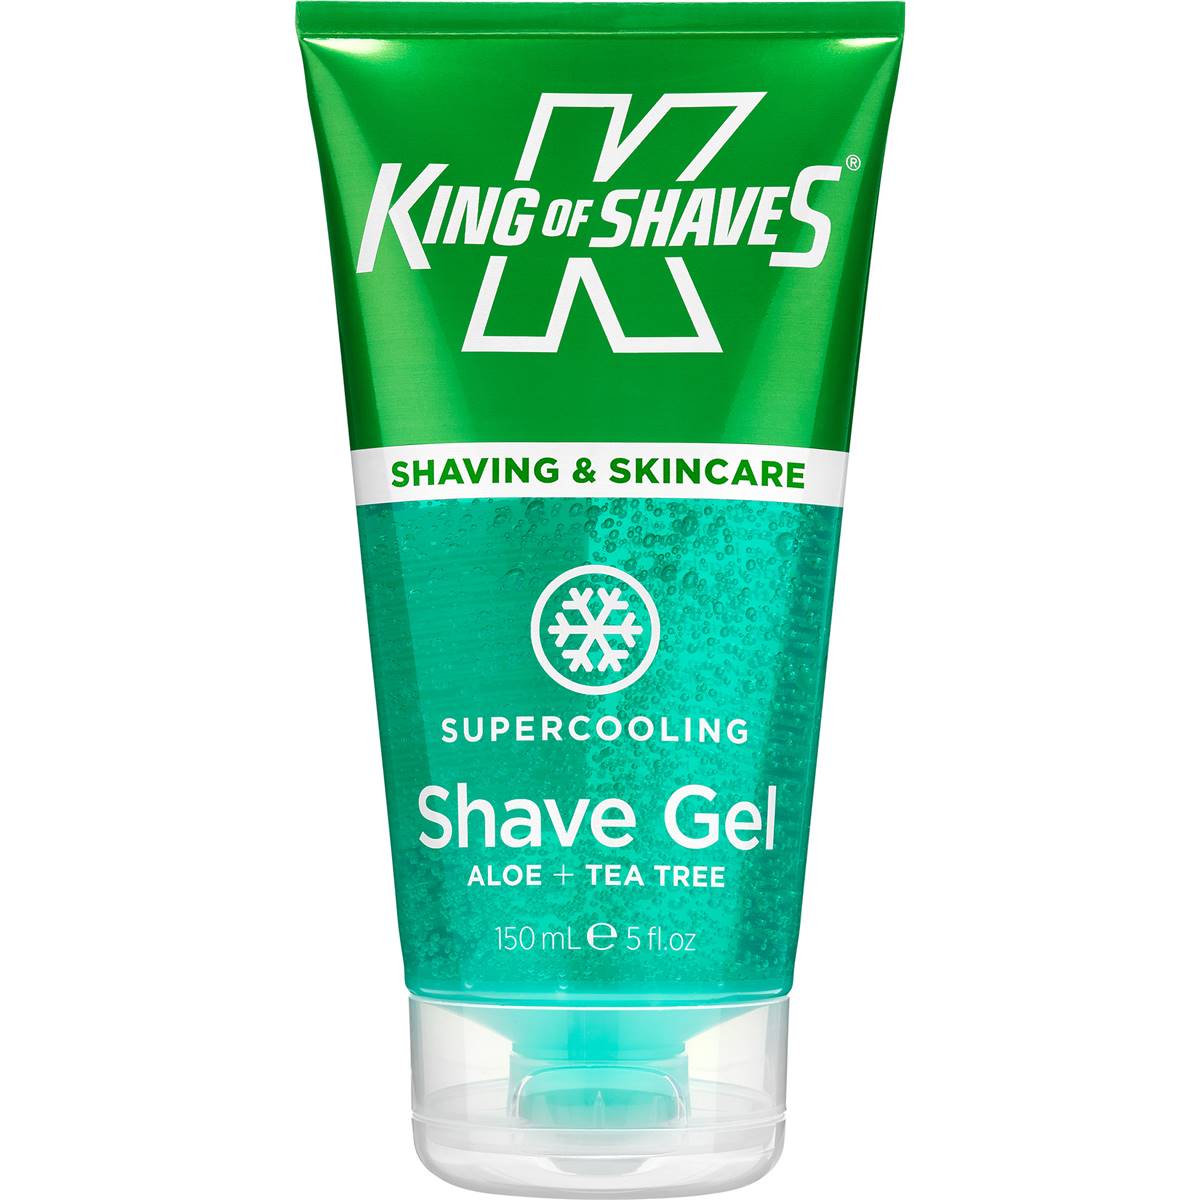 King of Shaves Shaving Gel Aloe + Tea Tree Supercooling 150g